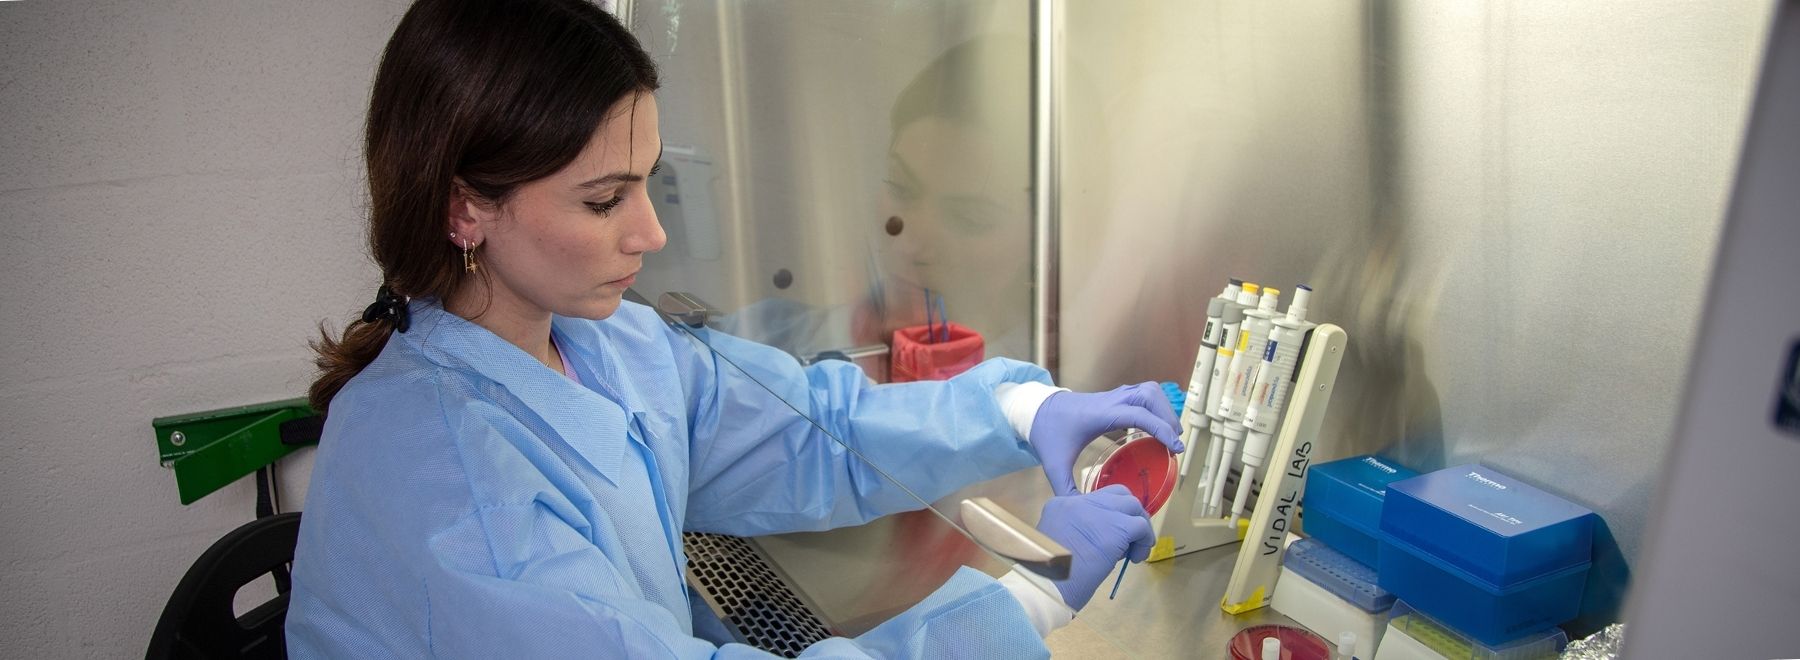 Medical student swabbing a petri dish inside the lab.